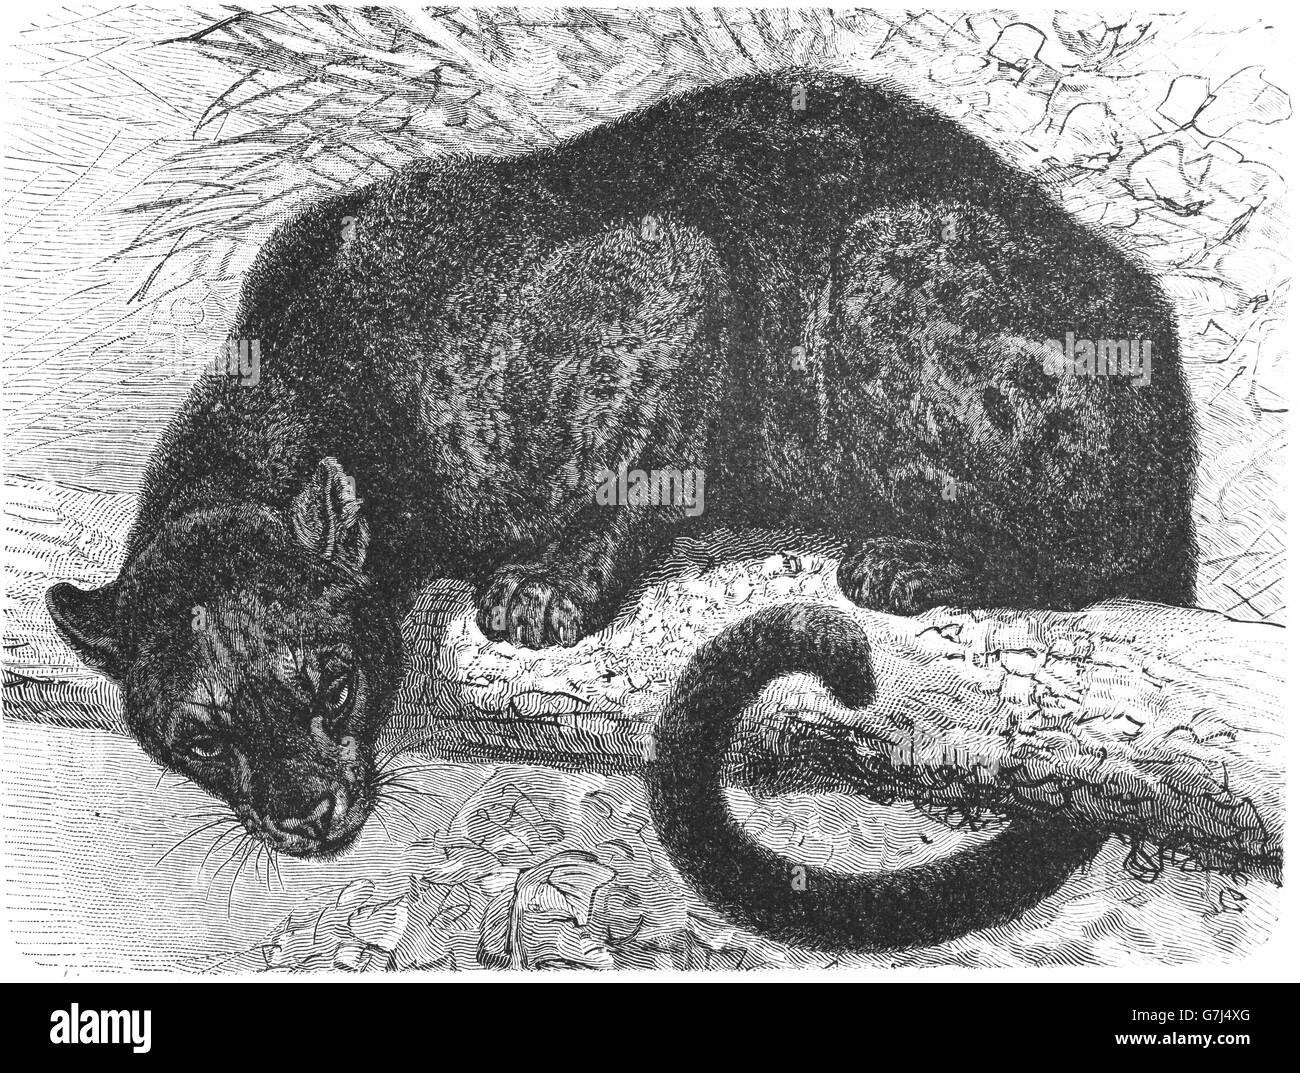 Black Panther, Panthera pardus, Wildcat, Melanism, Feliformia, Felidae, illustrazione dal libro datato 1904 Foto Stock